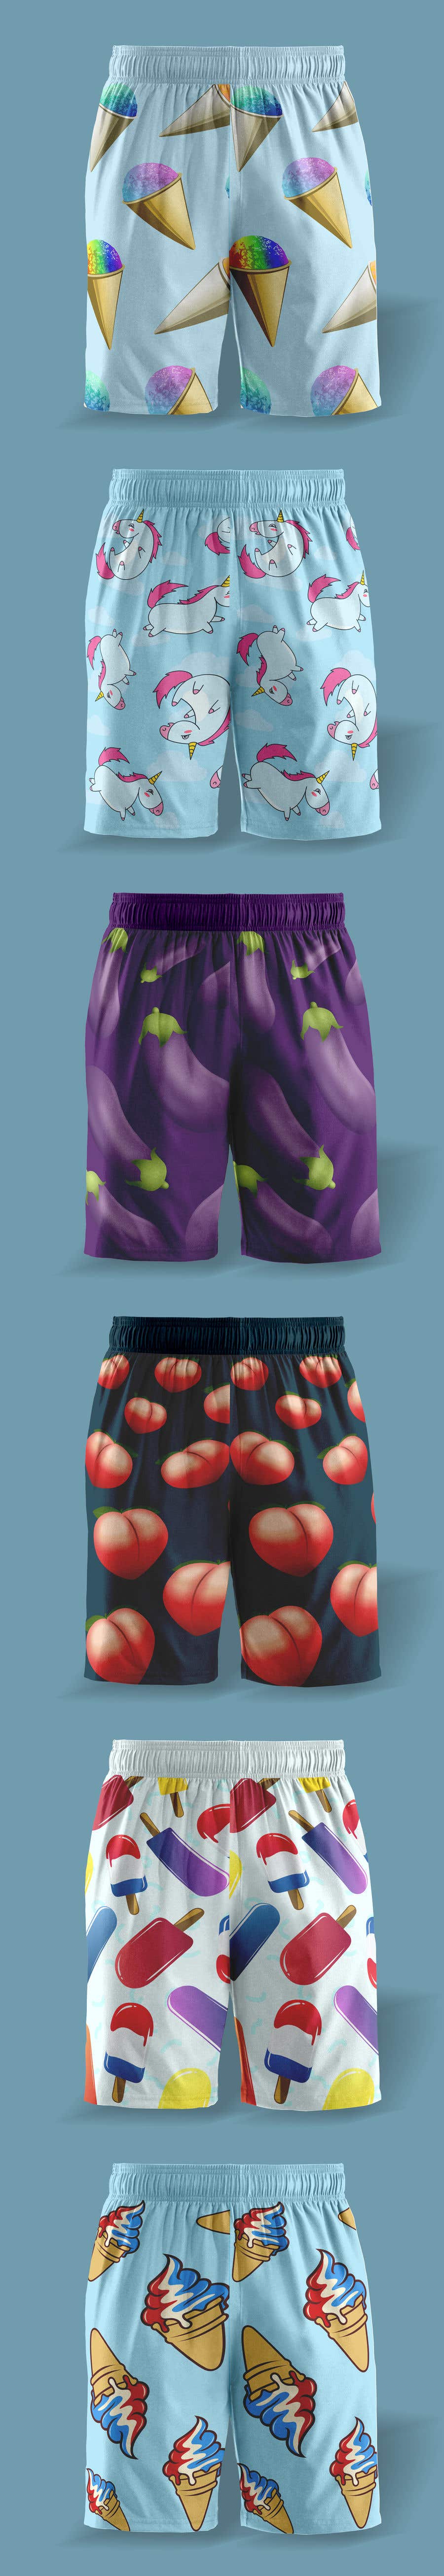 Wasilisho la Shindano #13 la                                                 Design 1 to 5  pairs of swim trunks geared towards younger gay male
                                            